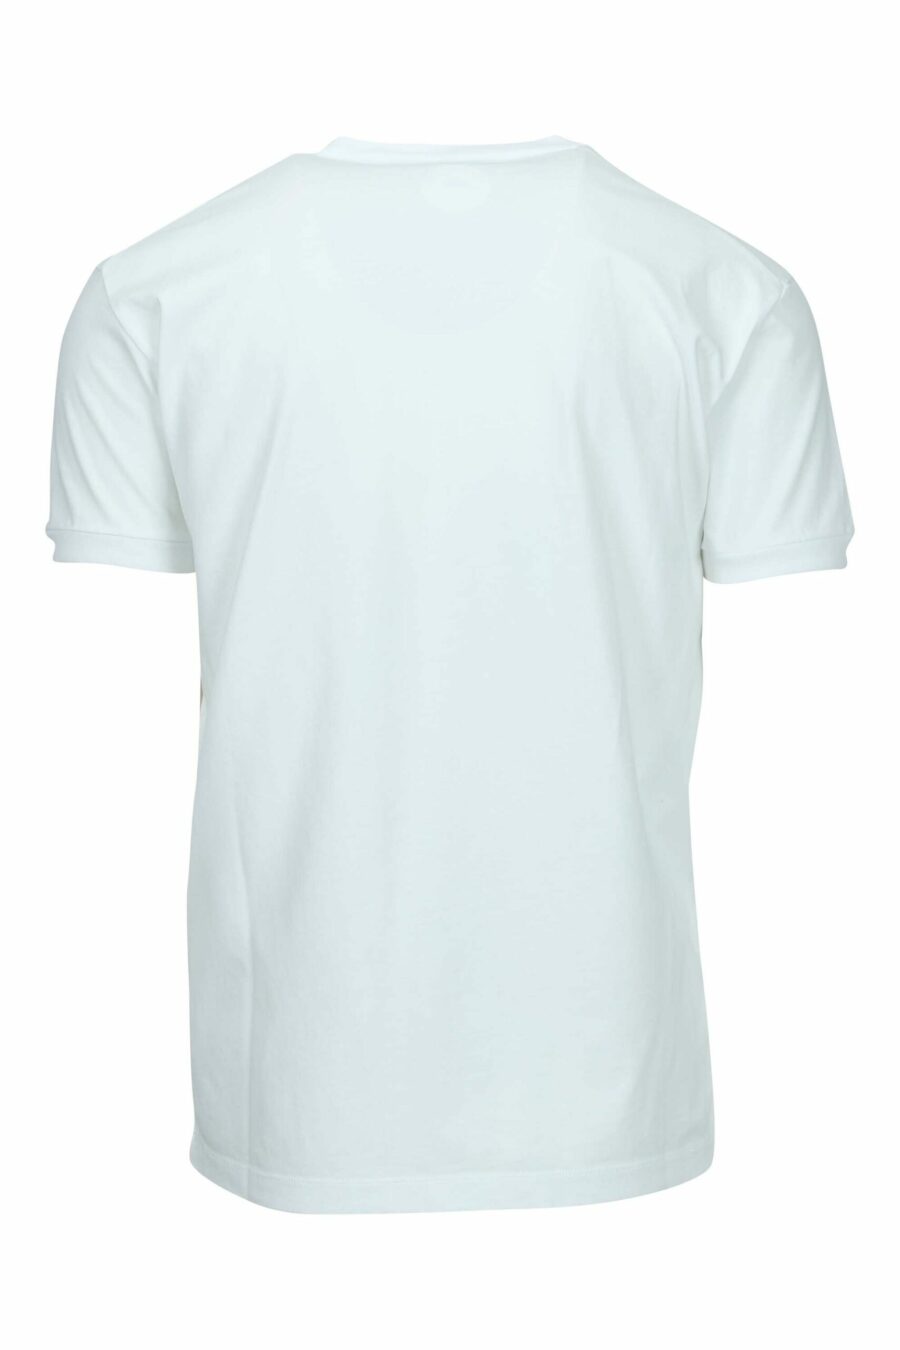 White T-shirt with multicoloured graffiti maxilogo - 8054148570620 1 scaled